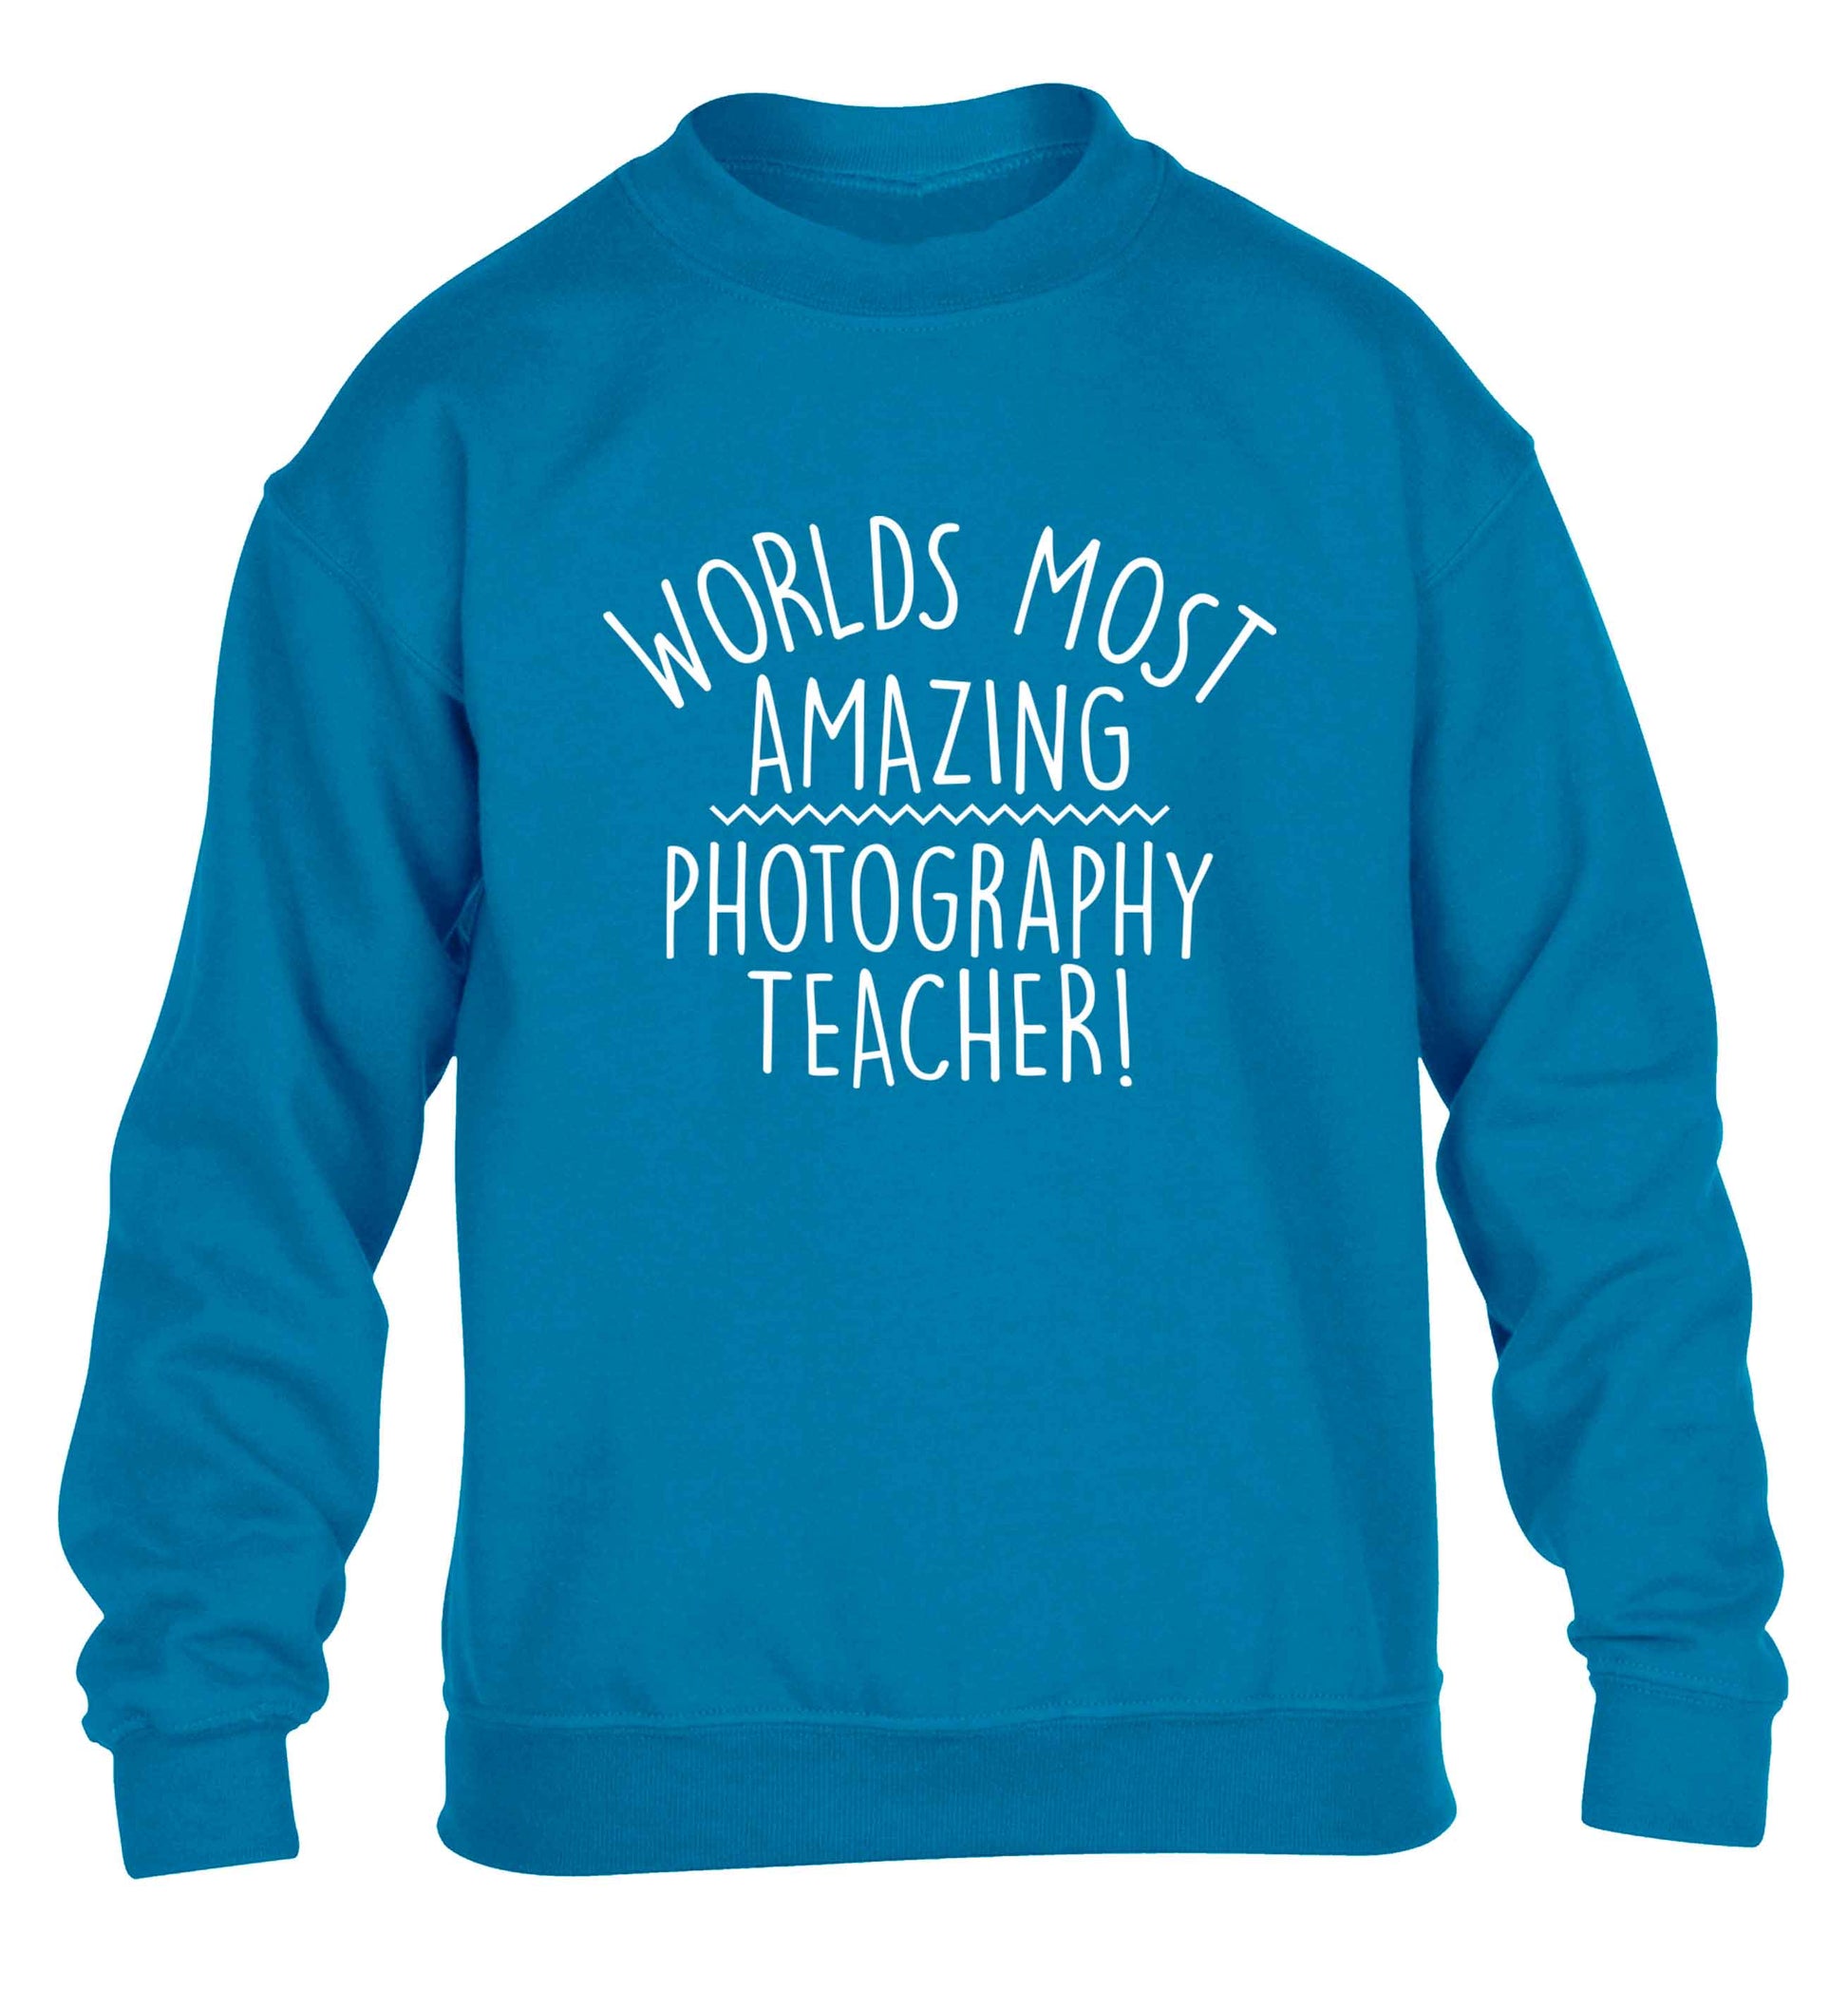 Worlds most amazing photography teacher children's blue sweater 12-13 Years